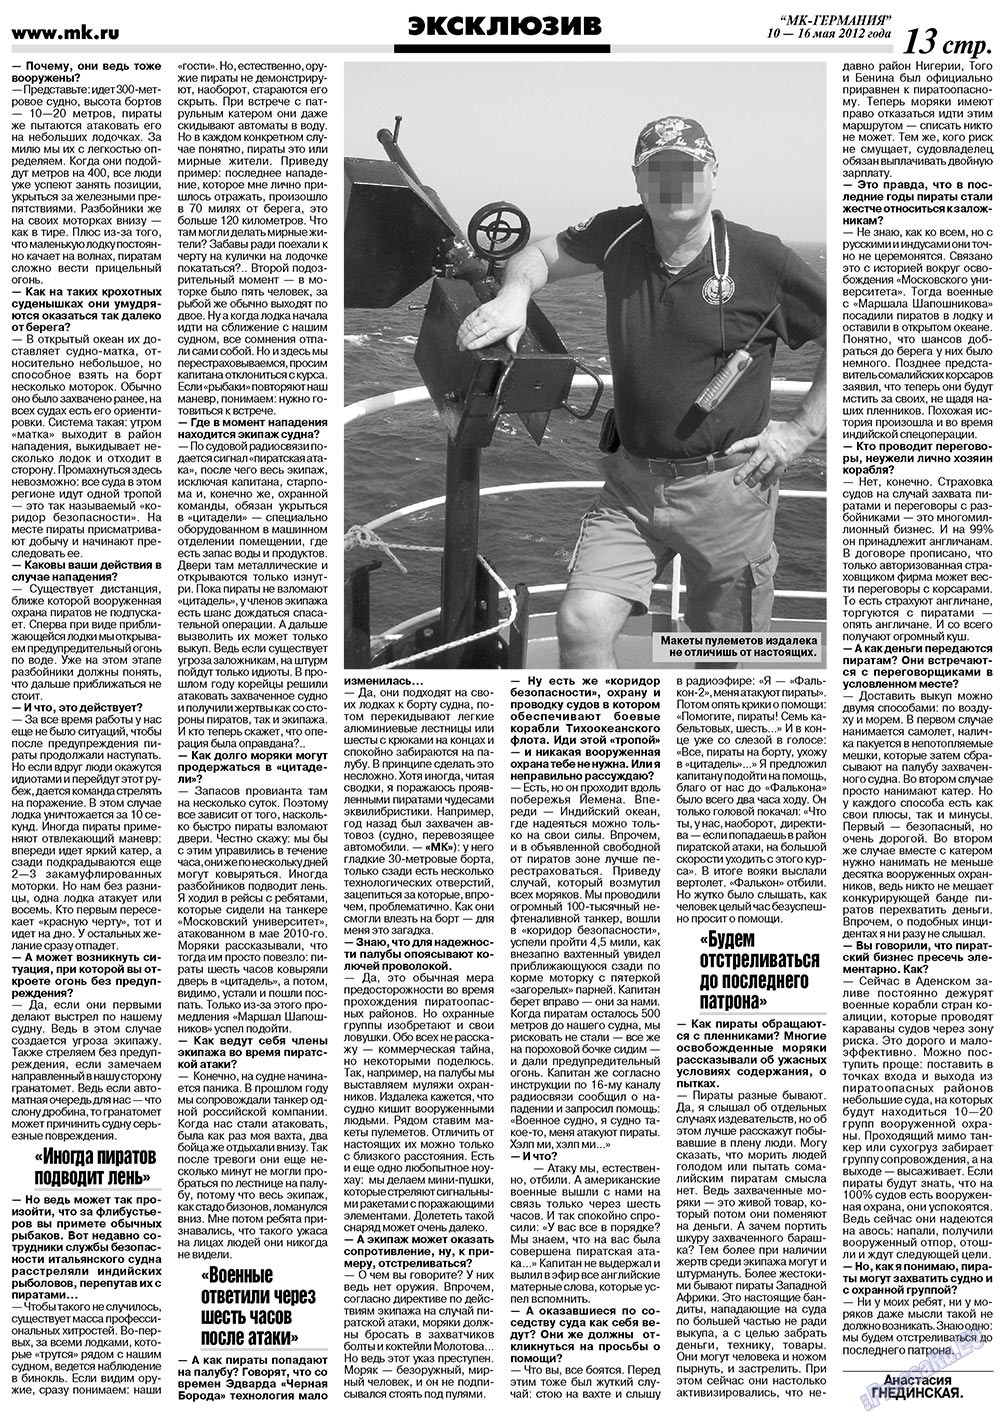 МК-Германия, газета. 2012 №19 стр.13